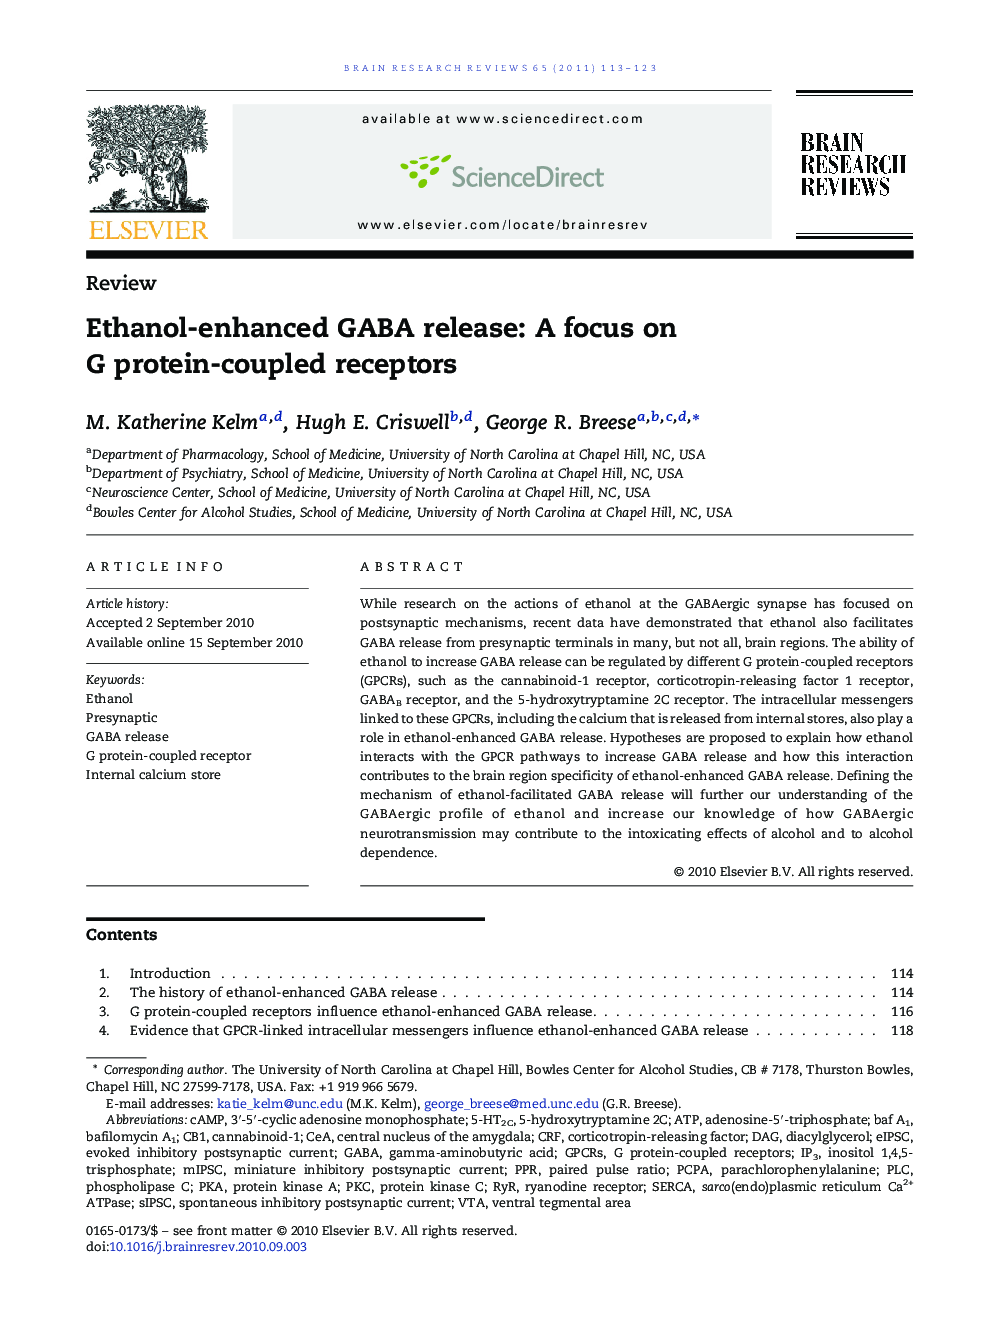 Ethanol-enhanced GABA release: A focus on G protein-coupled receptors